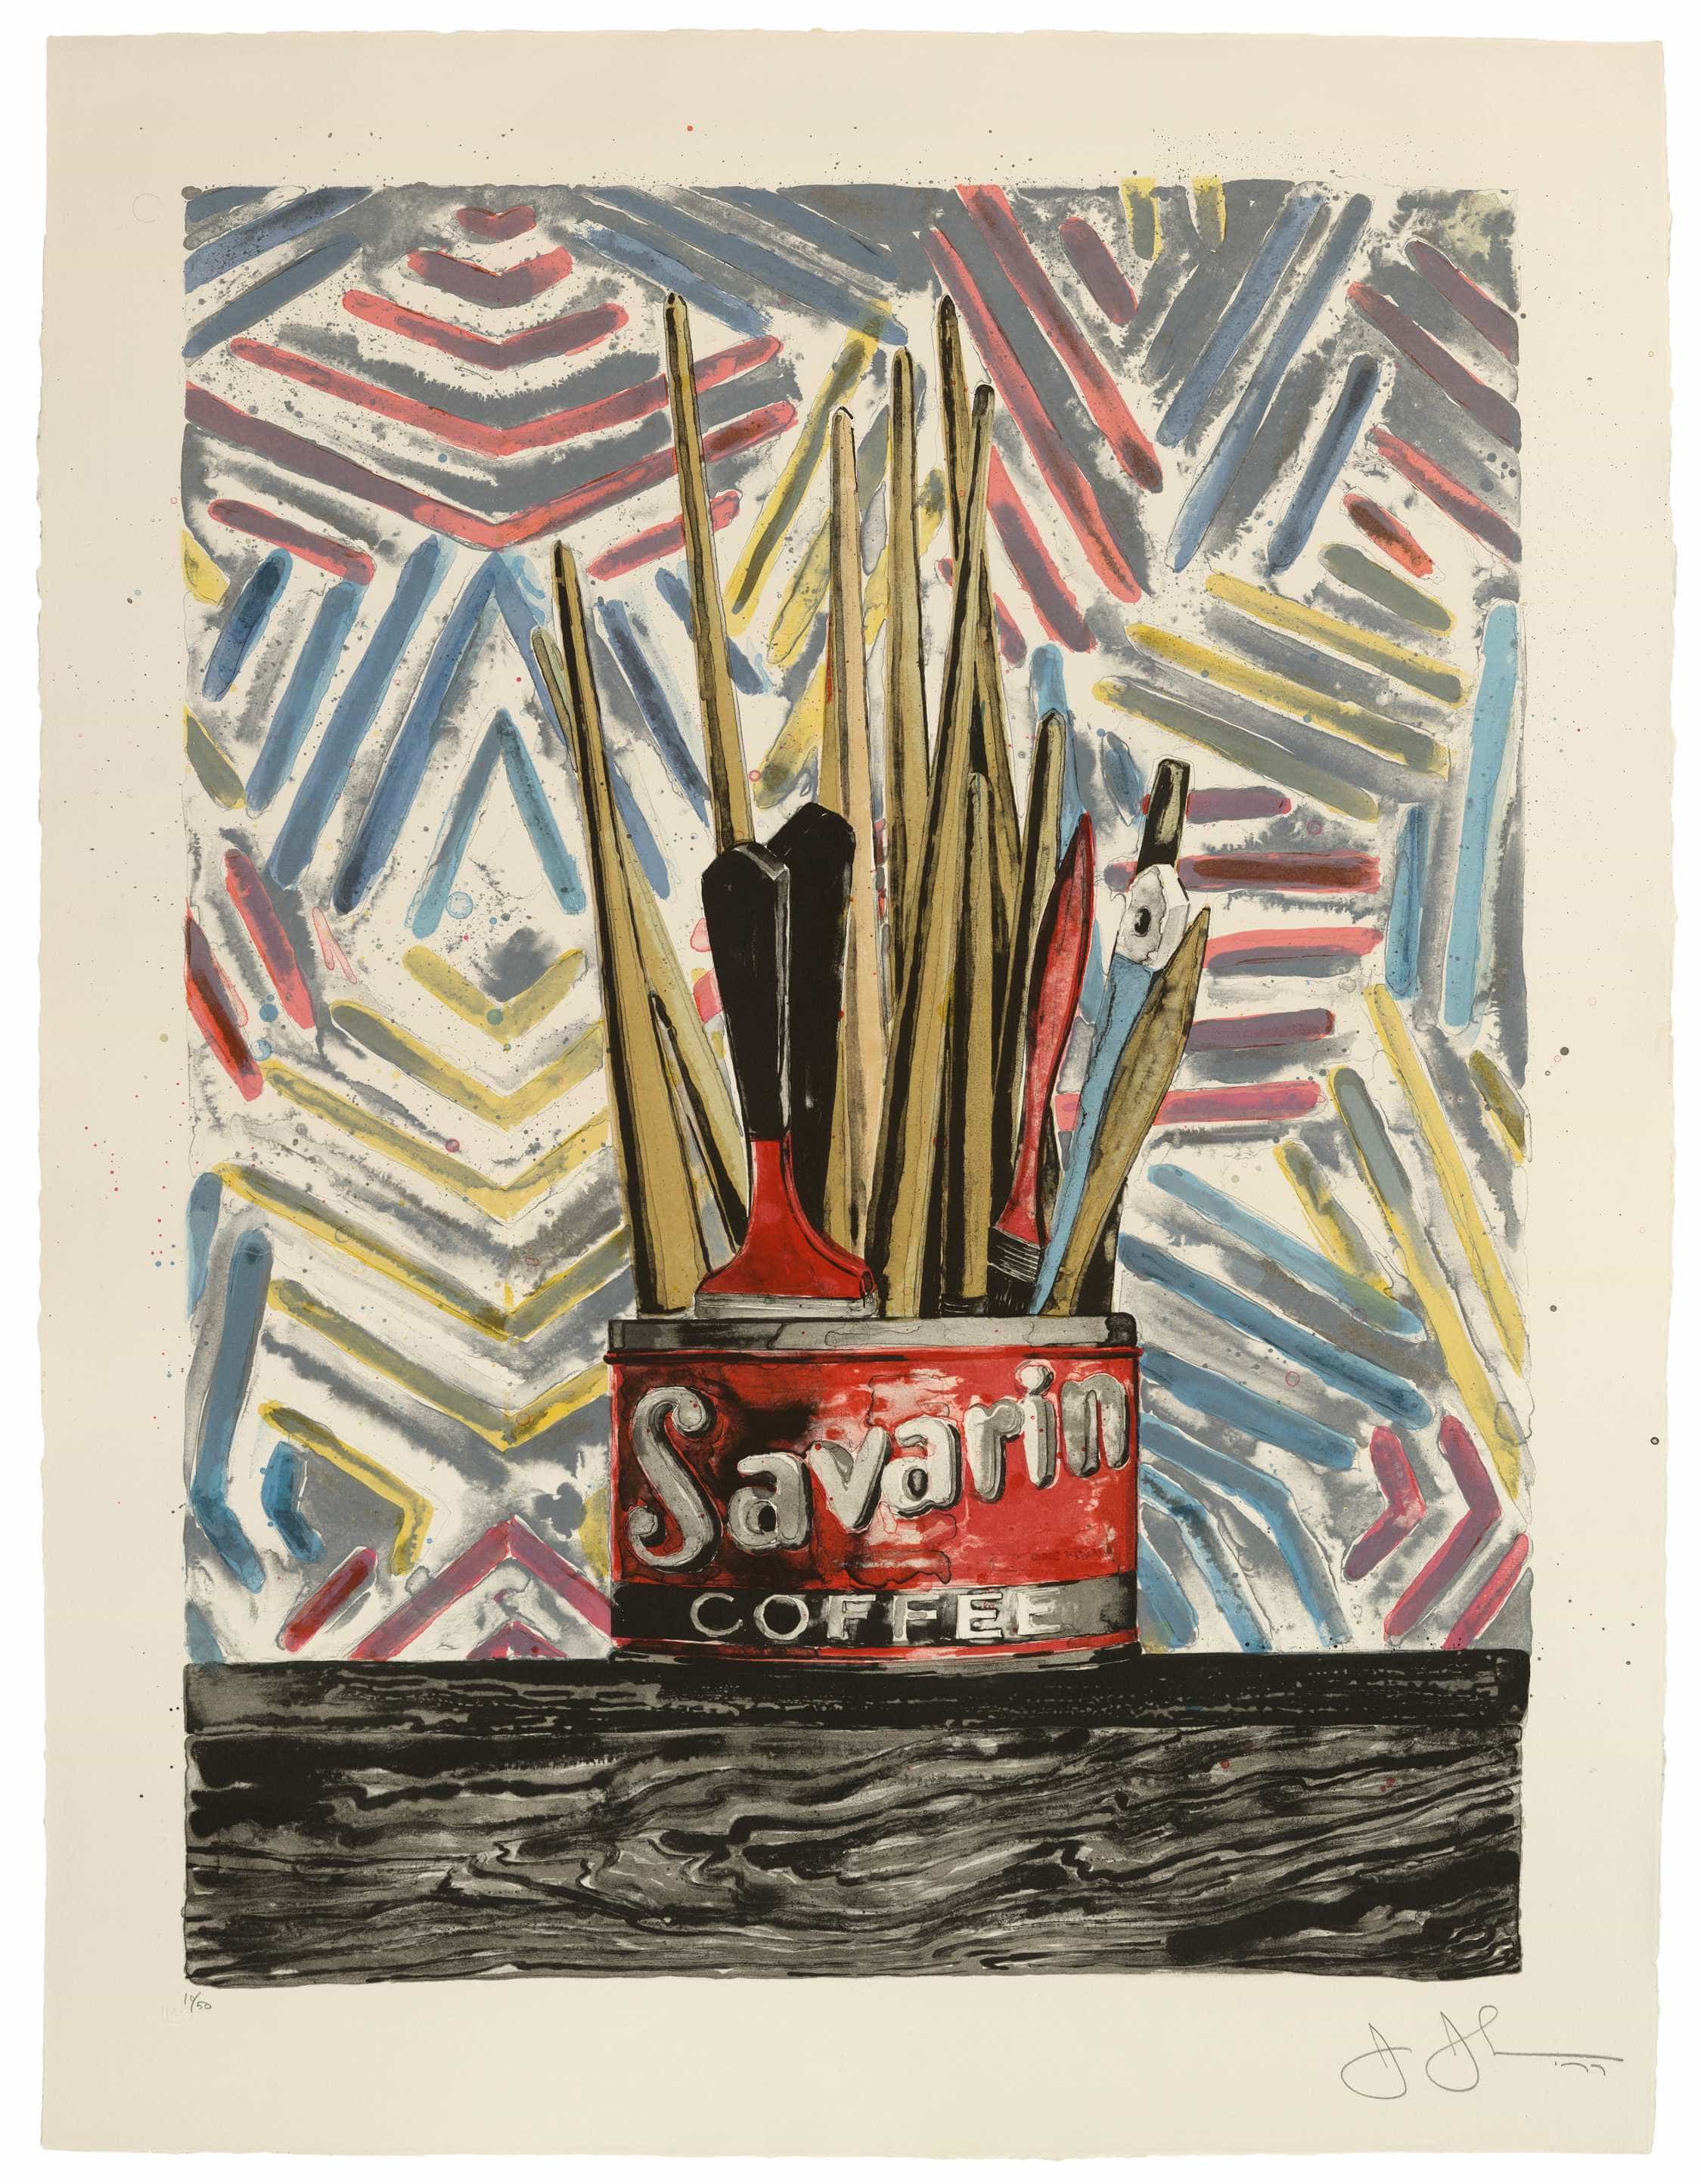 Savarin, 1977, Jasper Johns Universal Limited Art Editions (ULAE)